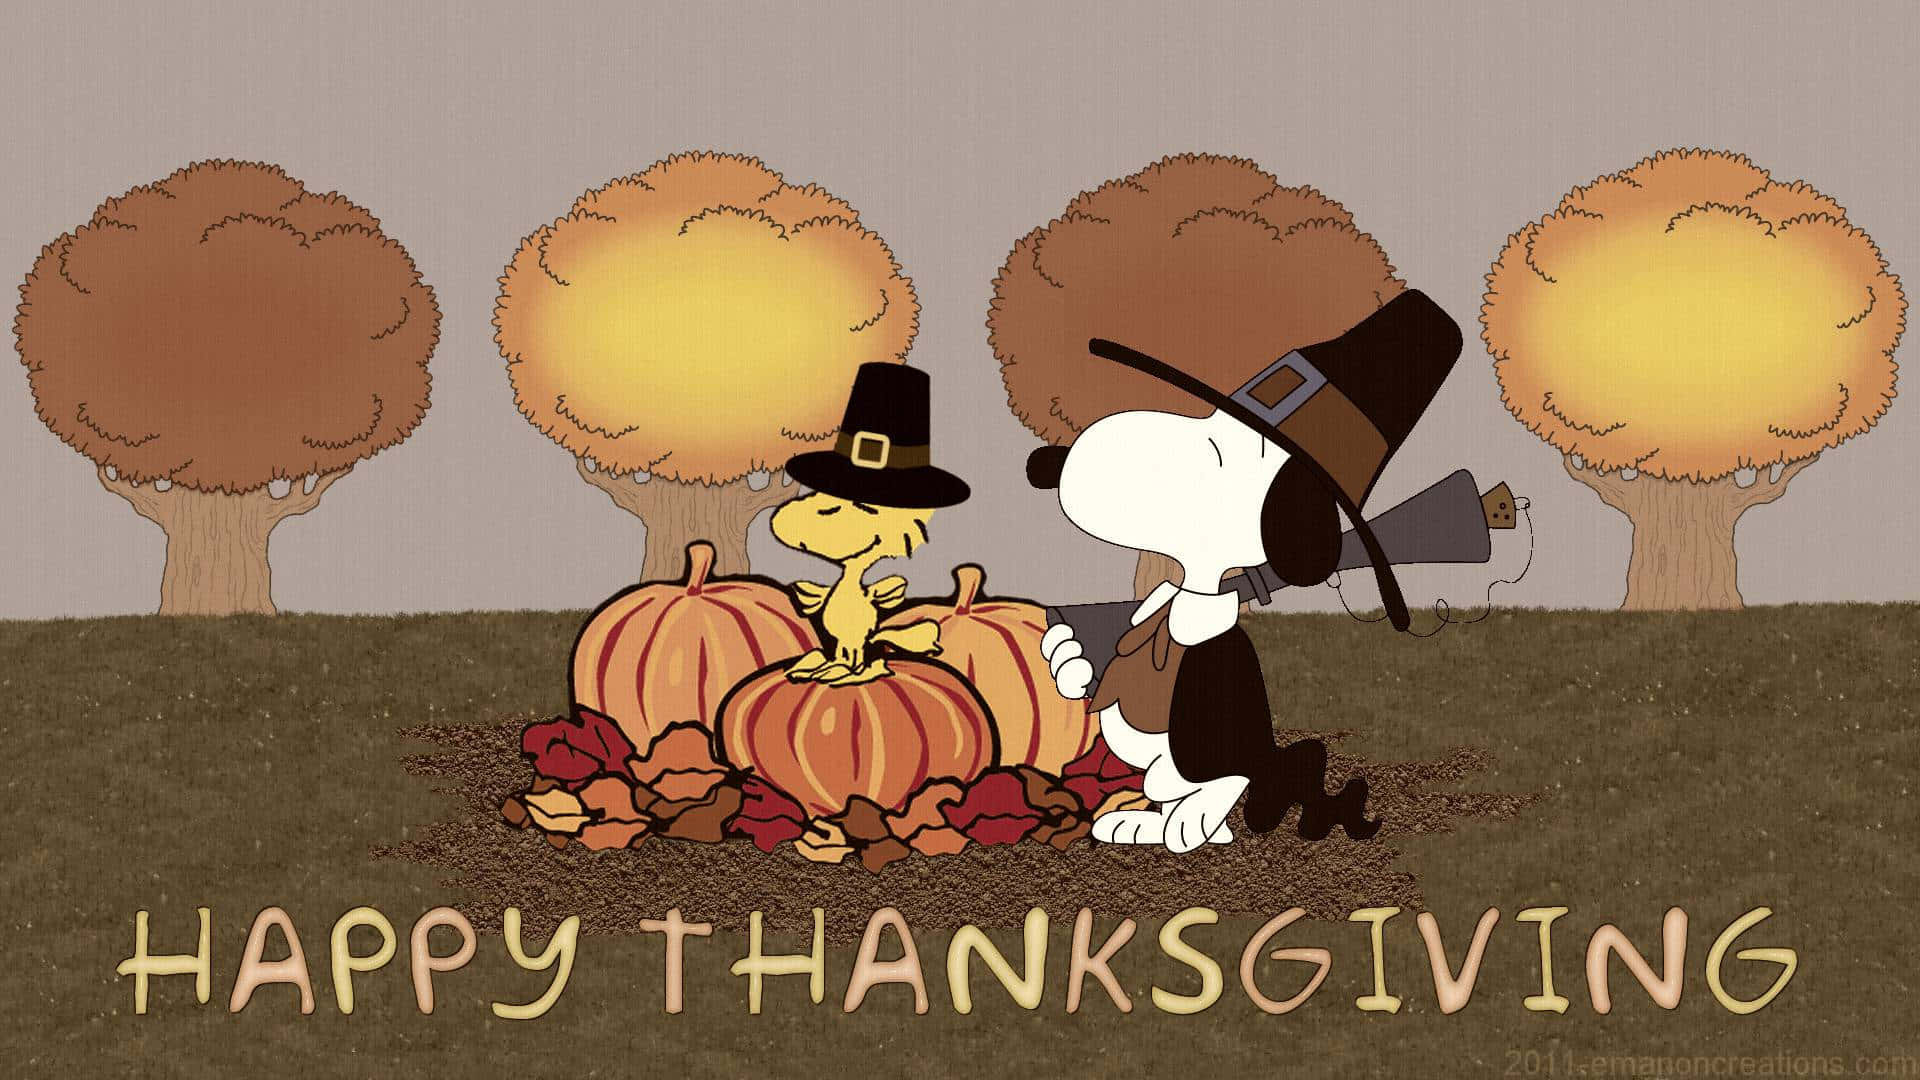 Snoopyfeiert Thanksgiving Mit Der Familie Wallpaper